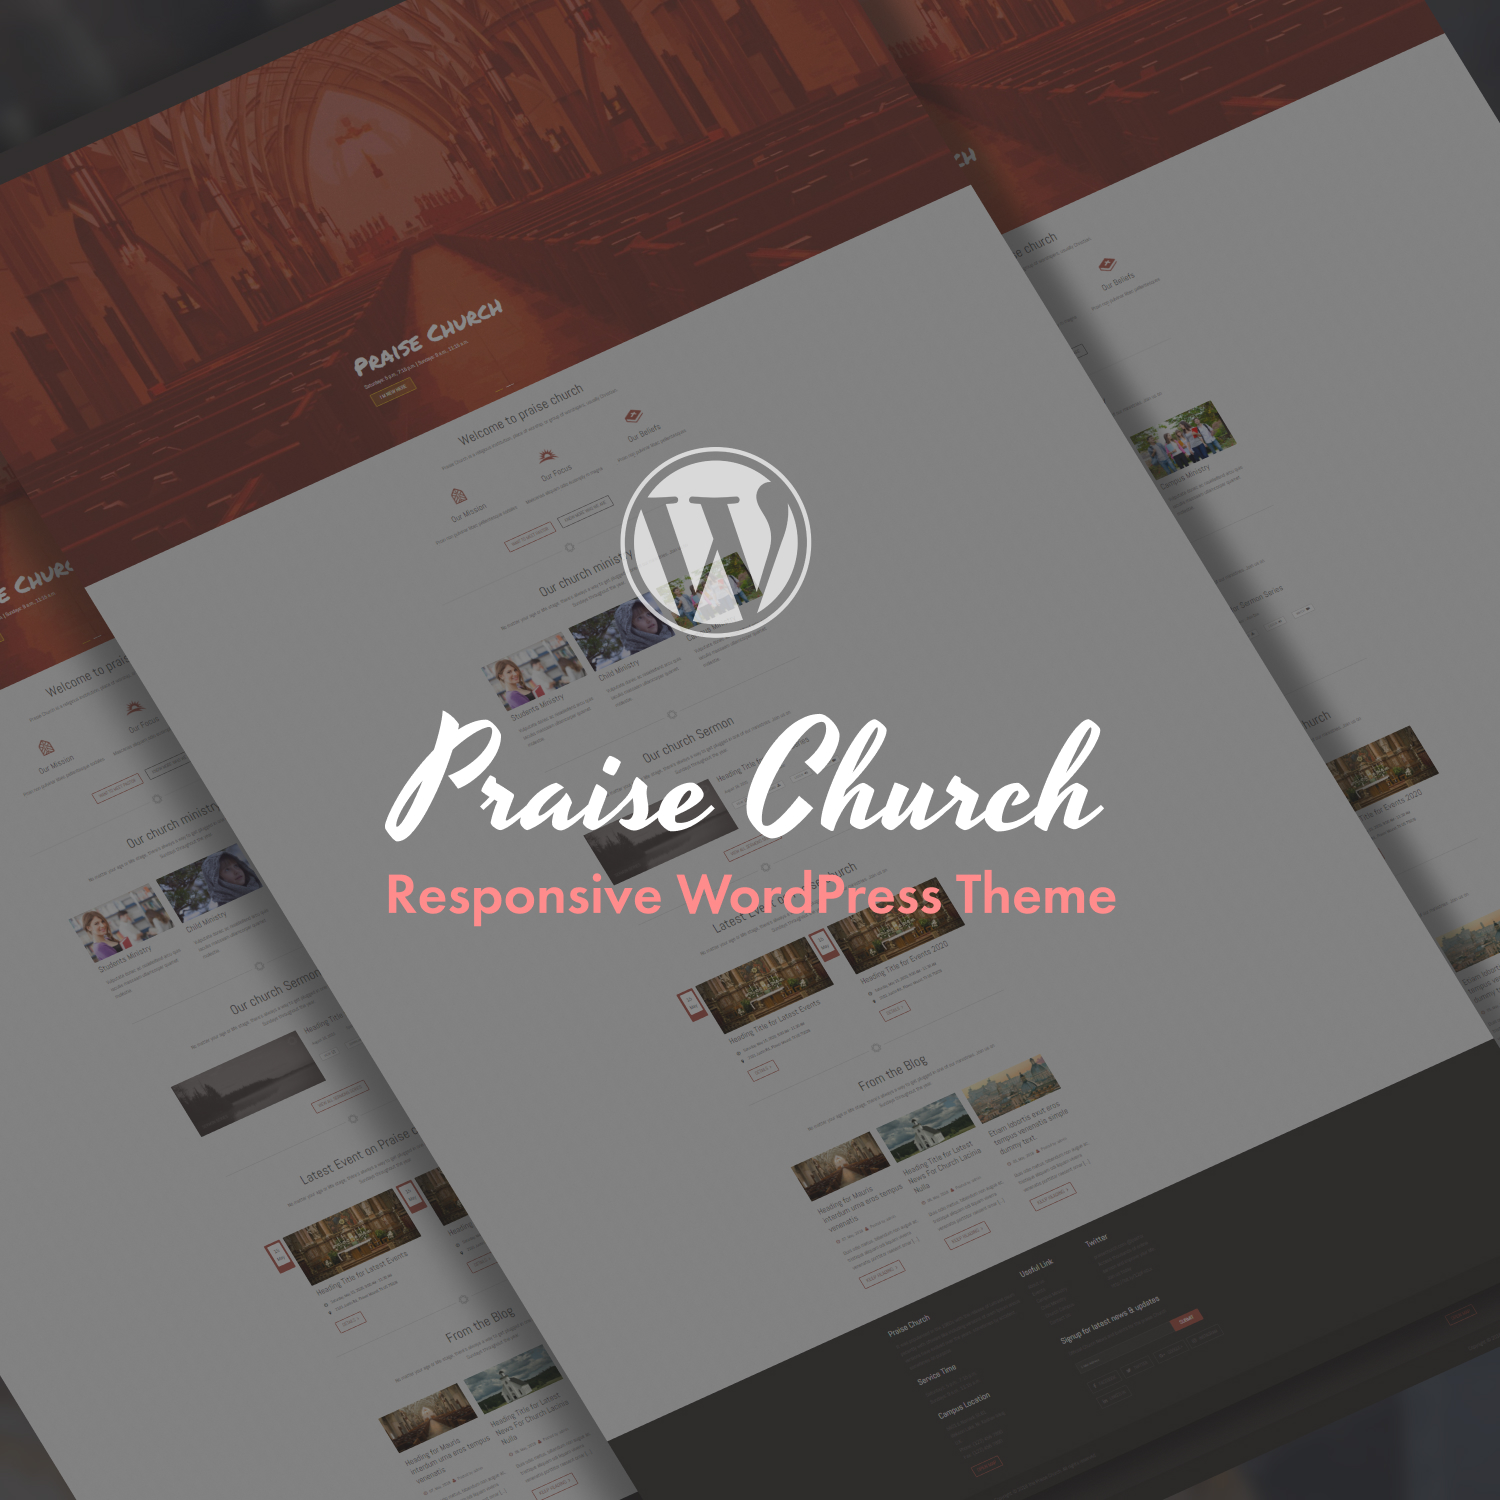 Images with praise church responsive wordpress theme.